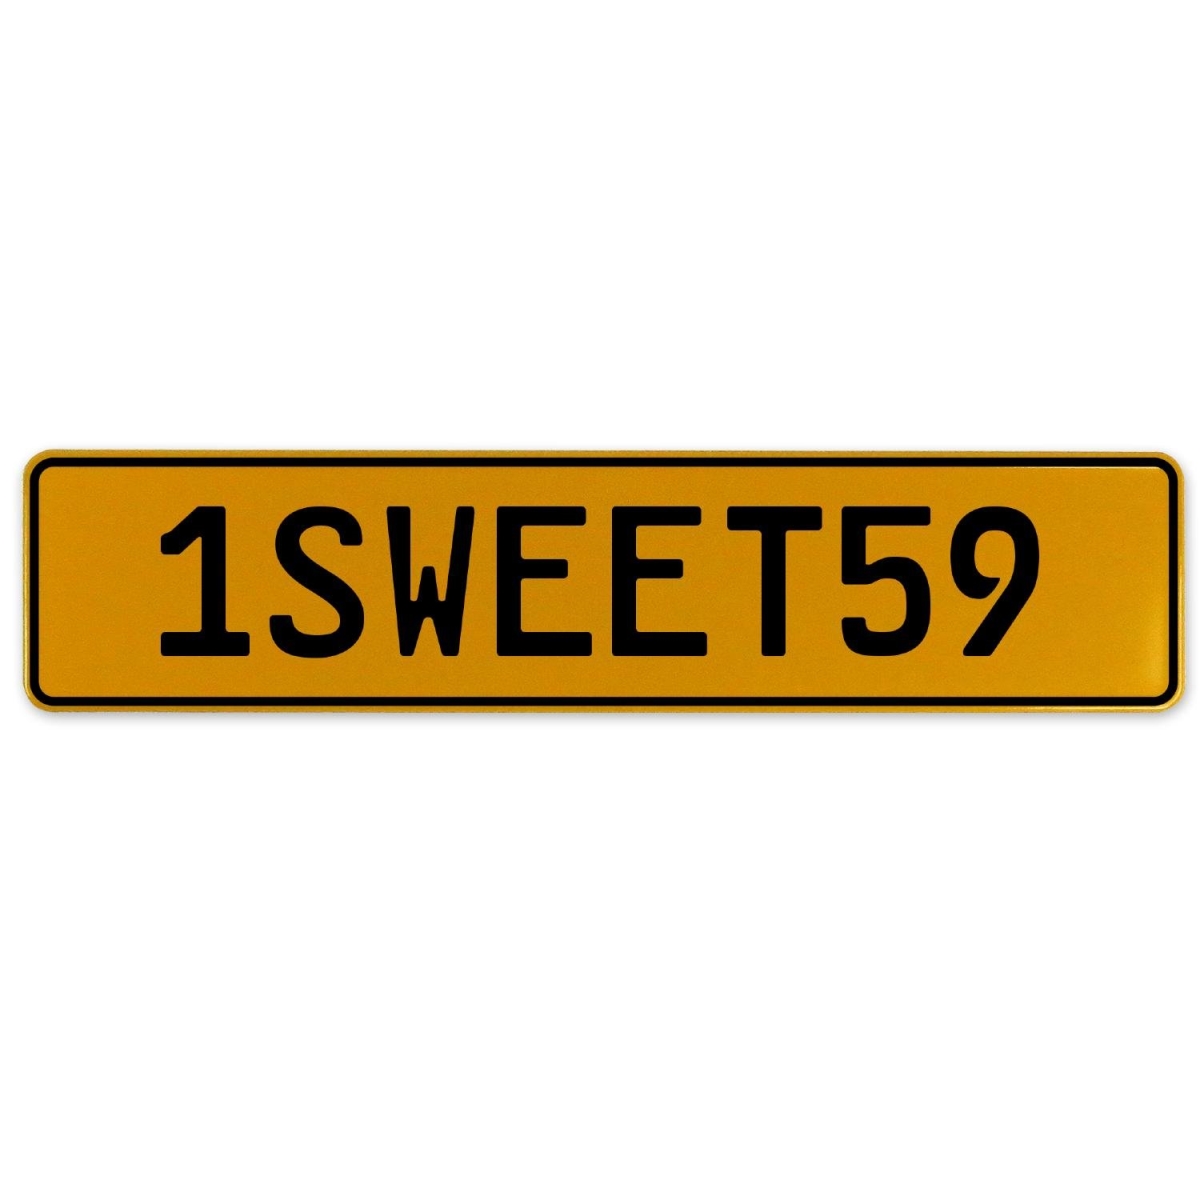 559309 1sweet59 - Yellow Aluminum Street Sign Mancave Euro Plate Name Door Sign Wall